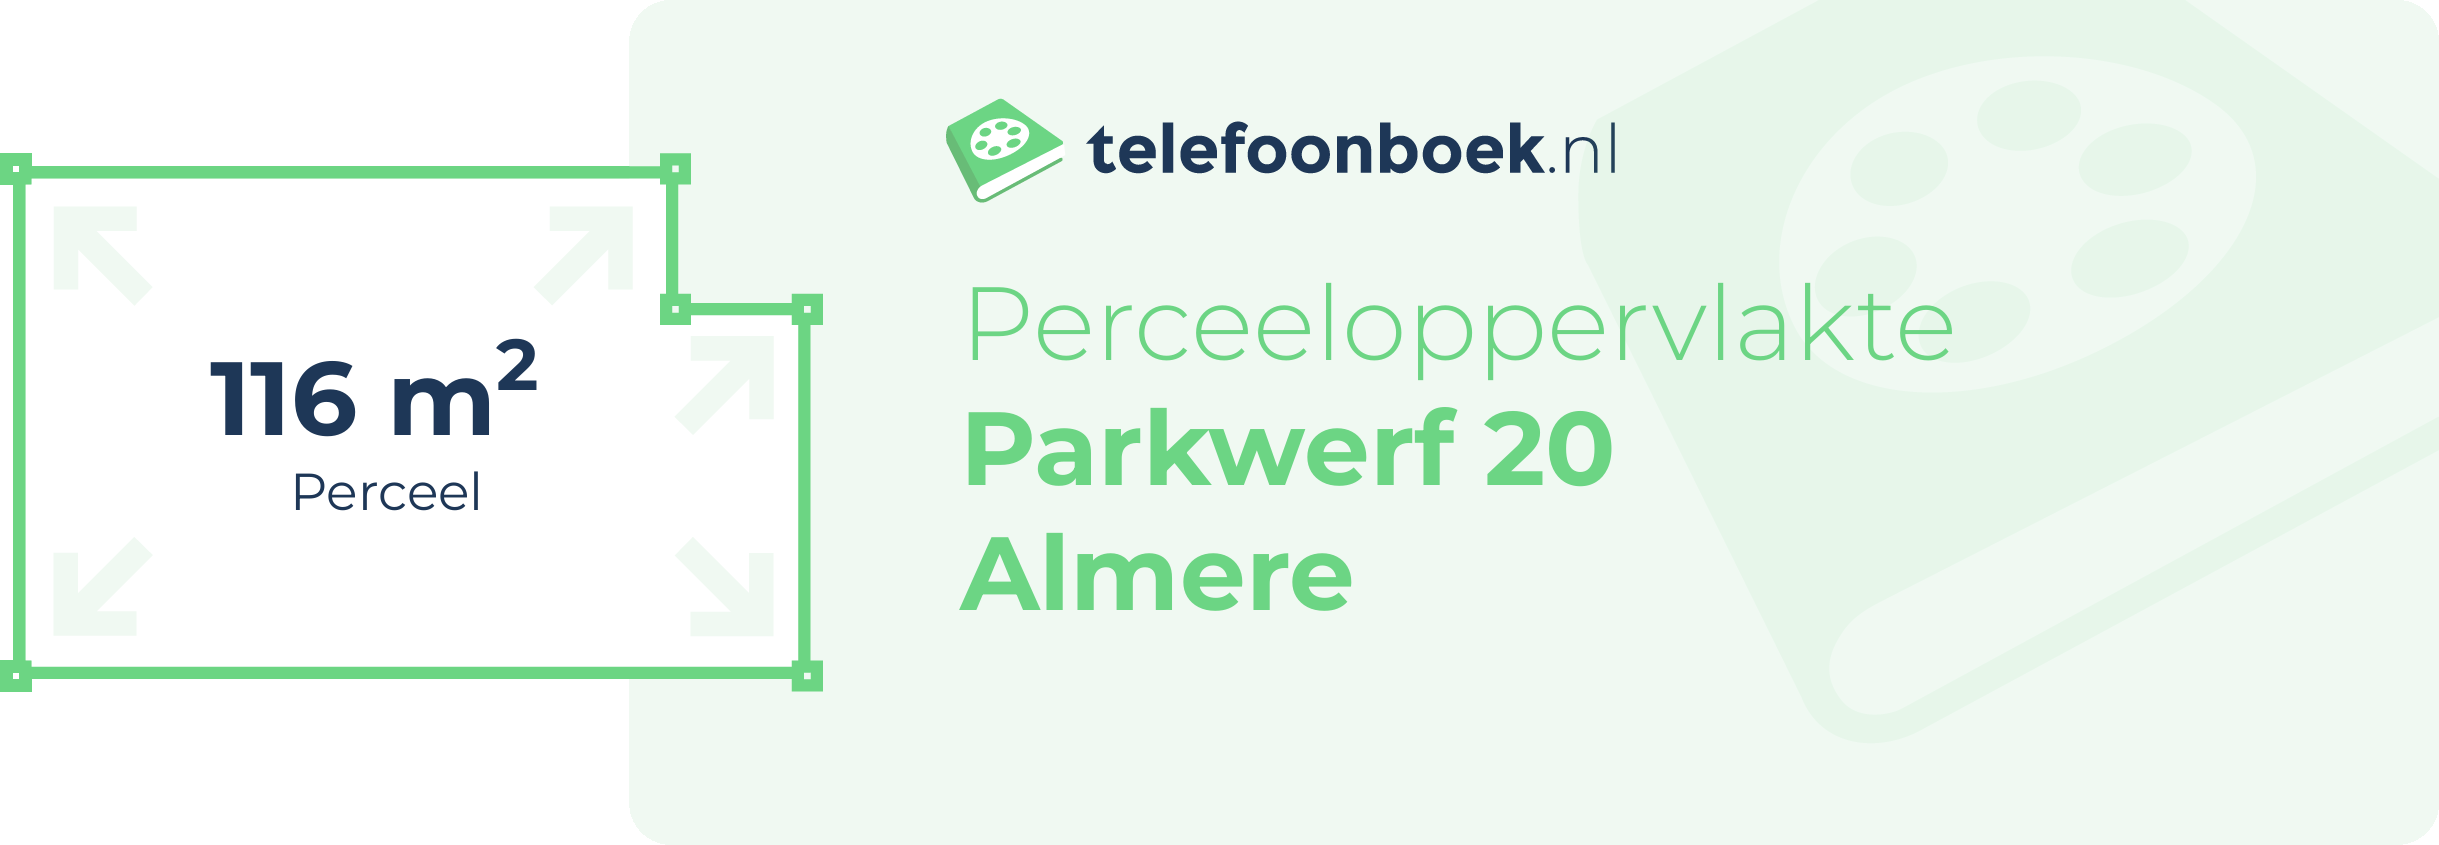 Perceeloppervlakte Parkwerf 20 Almere